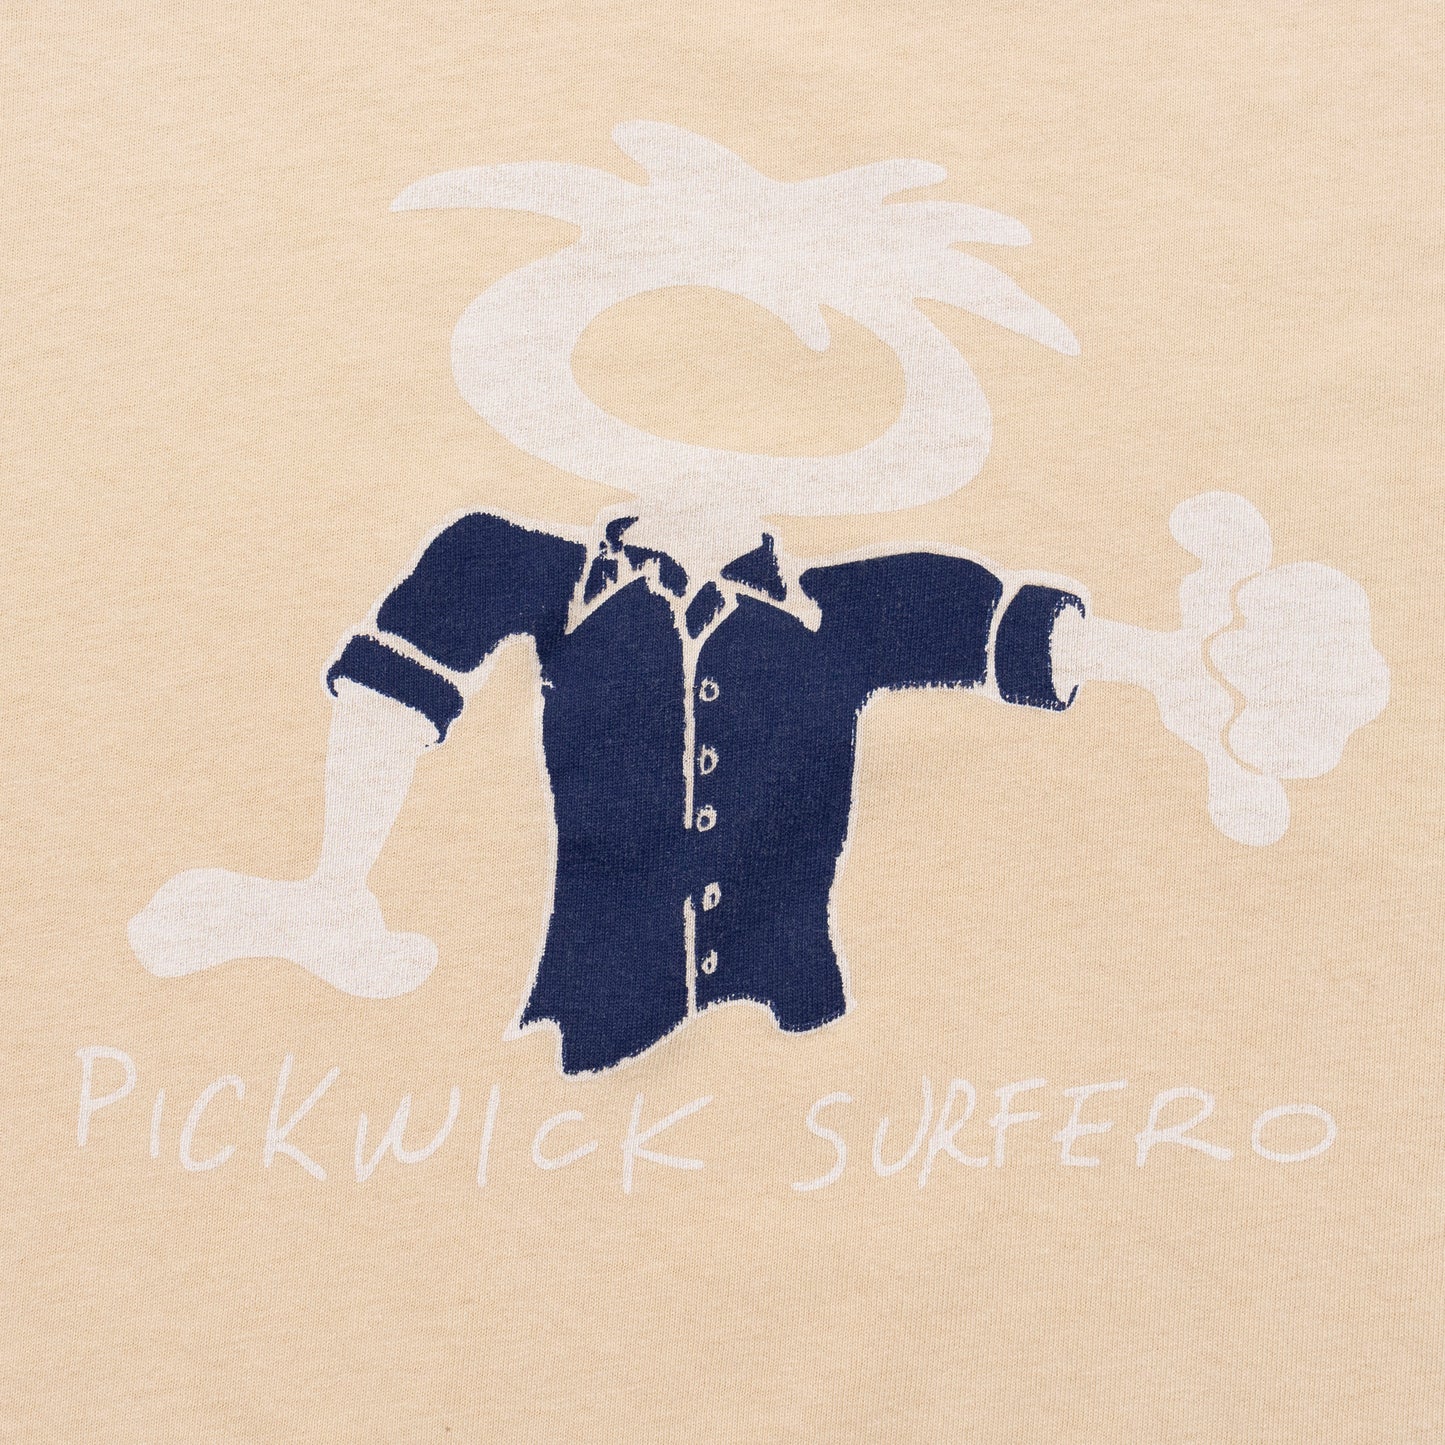 Pickwick Surfero T Shirt, S